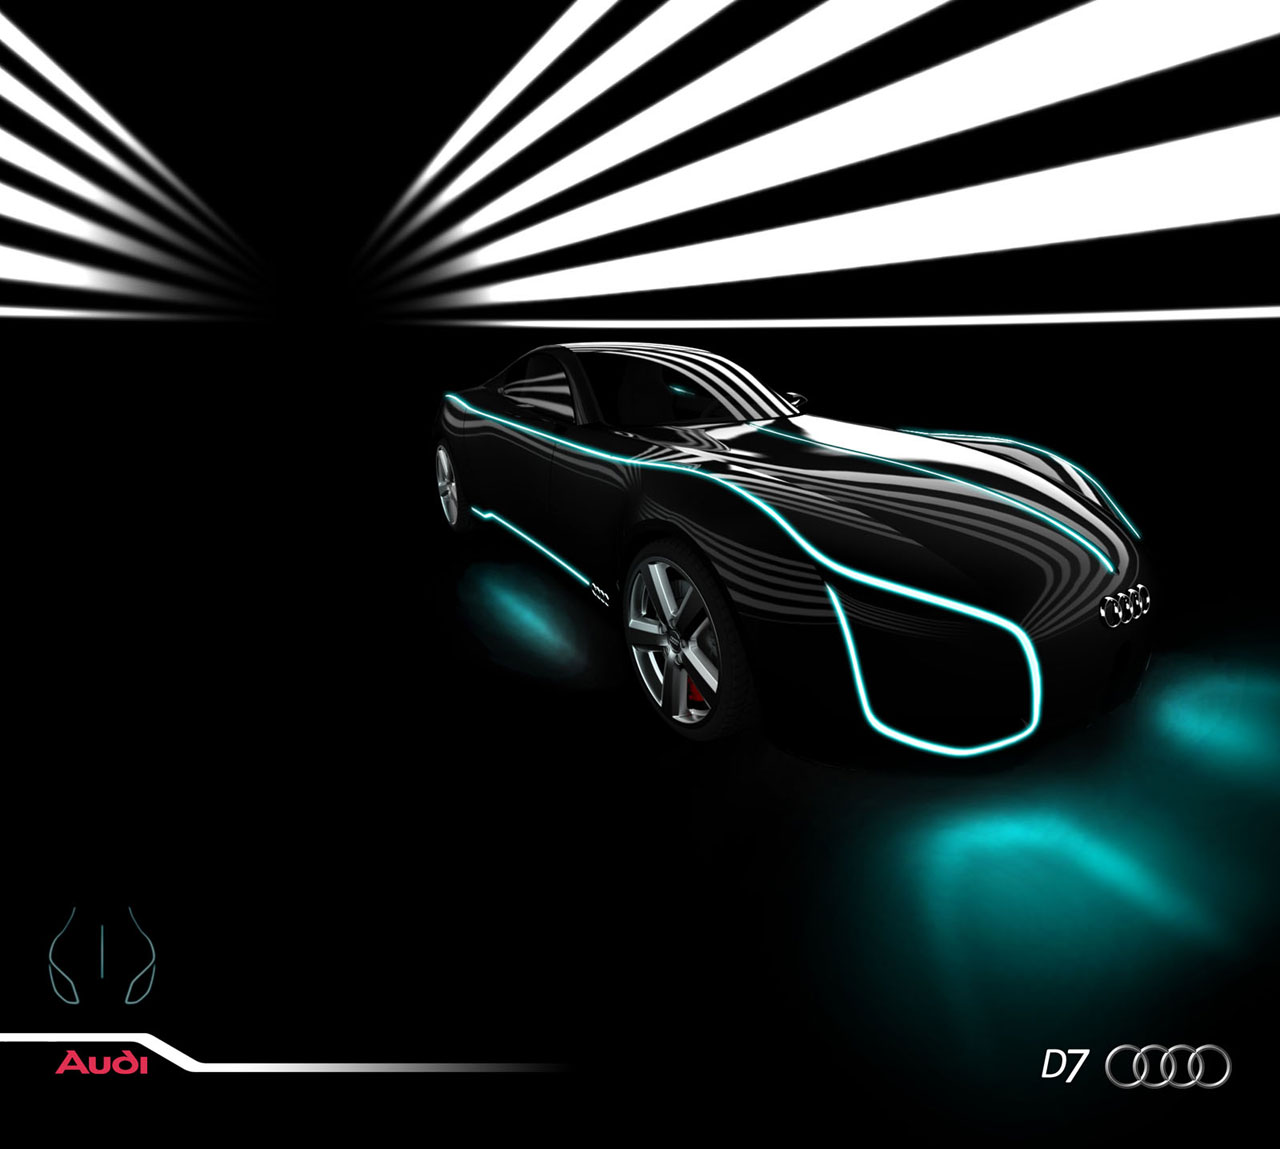 Audi-D7-Concept-3-lg.jpg